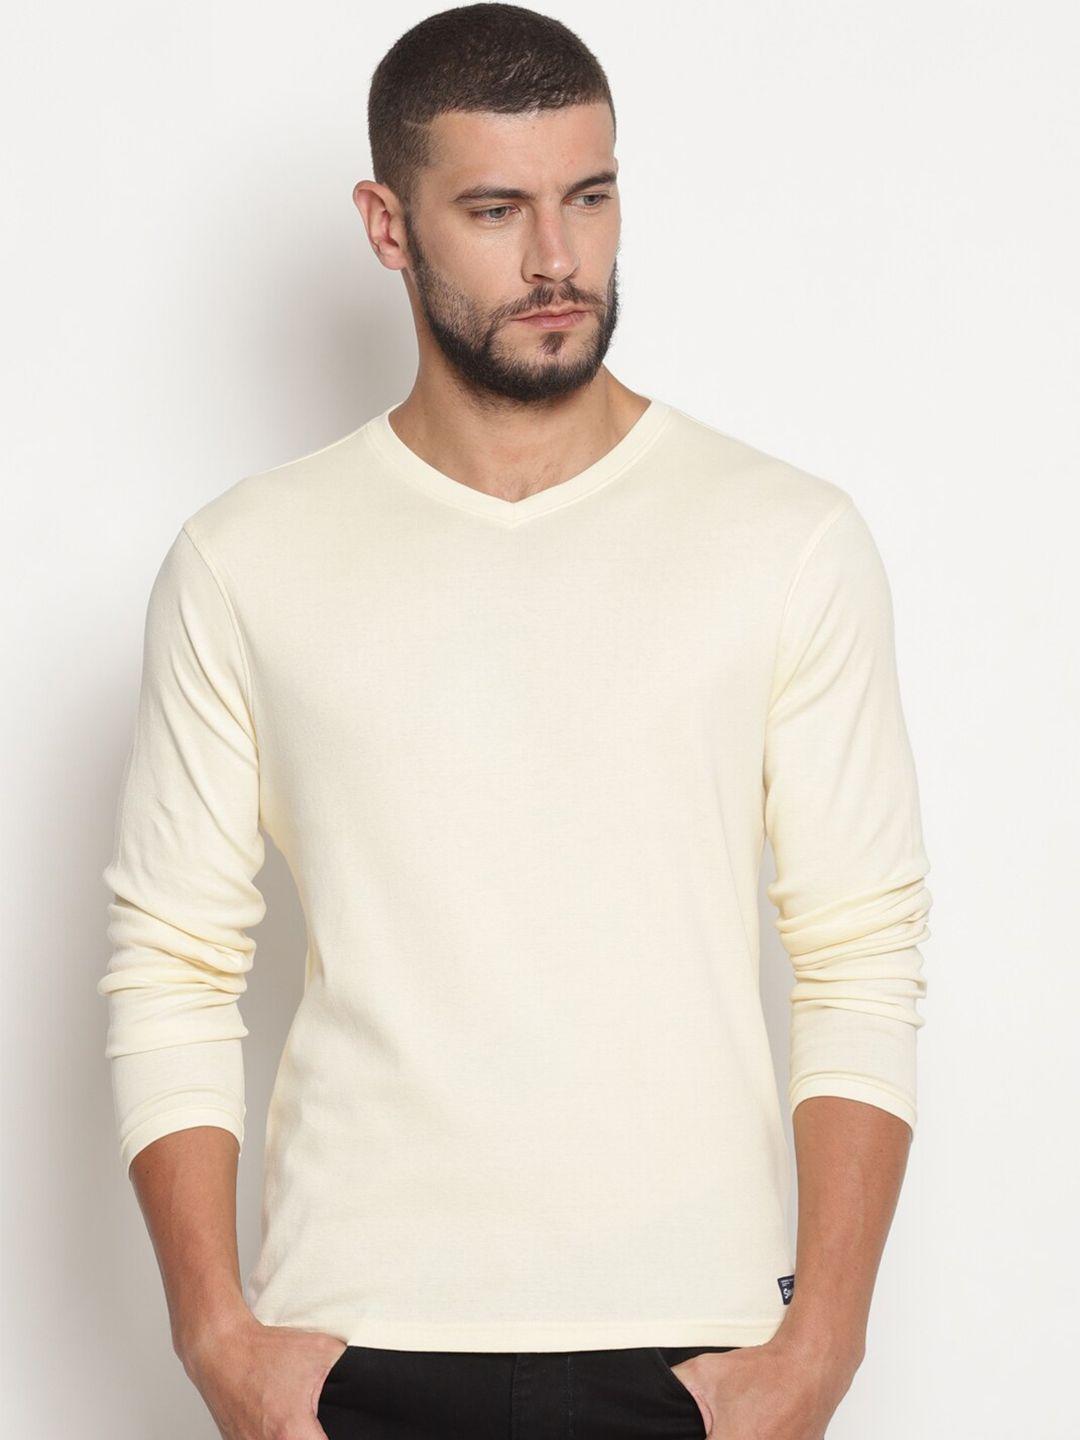 steenbok-men-off-white-v-neck-slim-fit-t-shirt